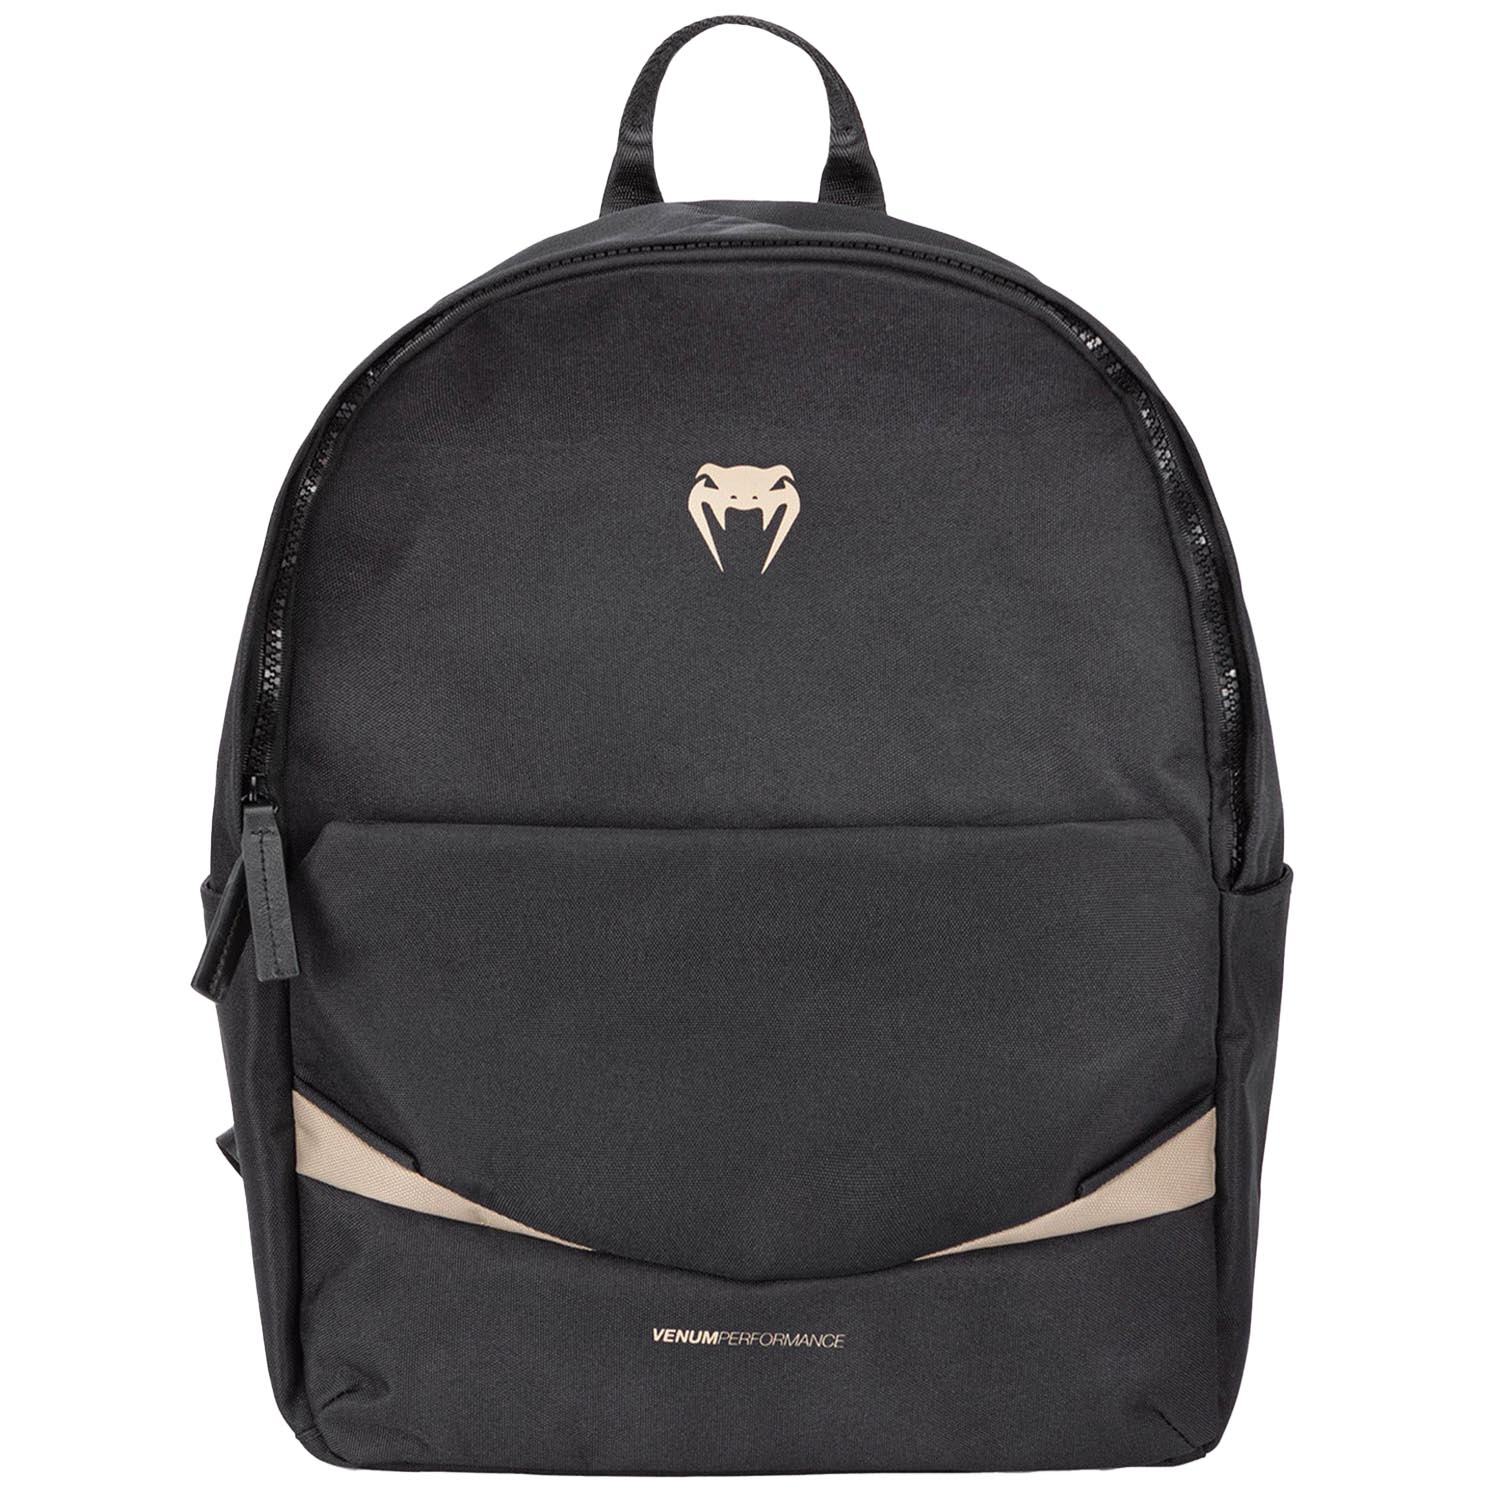 VENUM Backpack, Evo 2 Light, black-sand